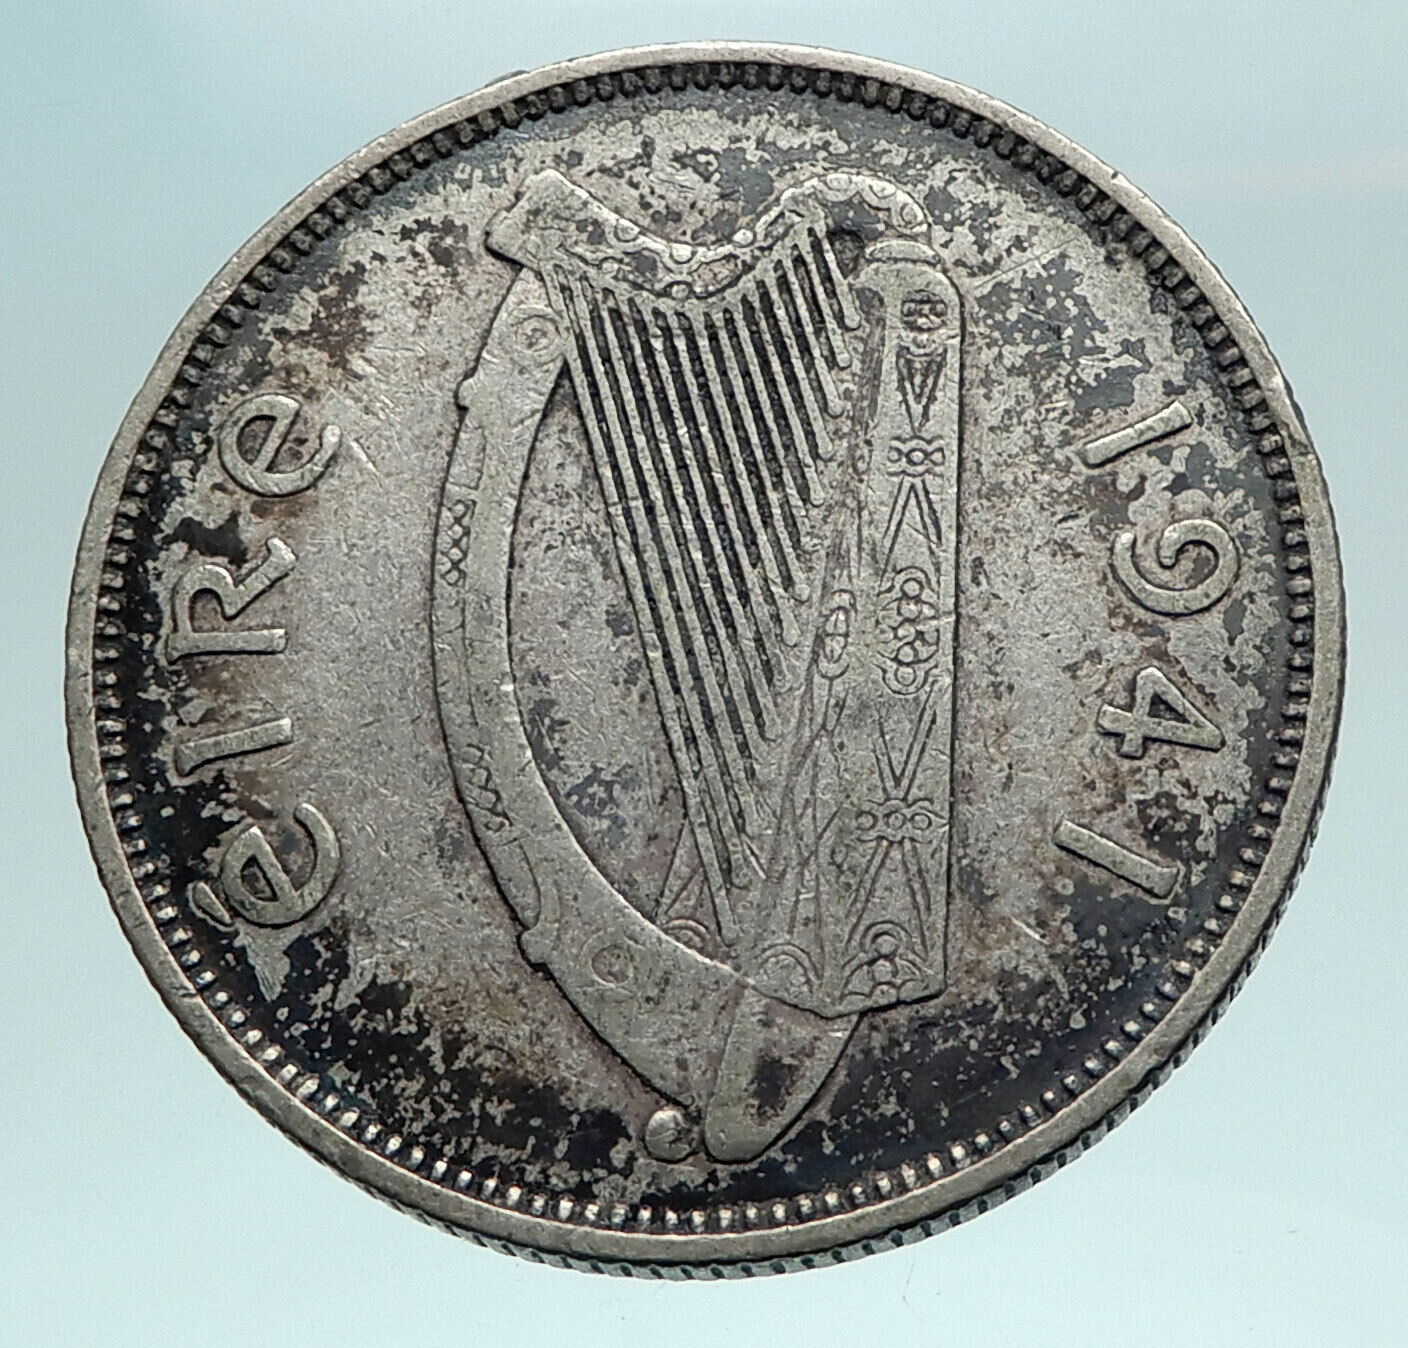 1941 IRELAND w HORSE LYRE HARP Vintage Genuine Silver Florin IRISH Coin i82527